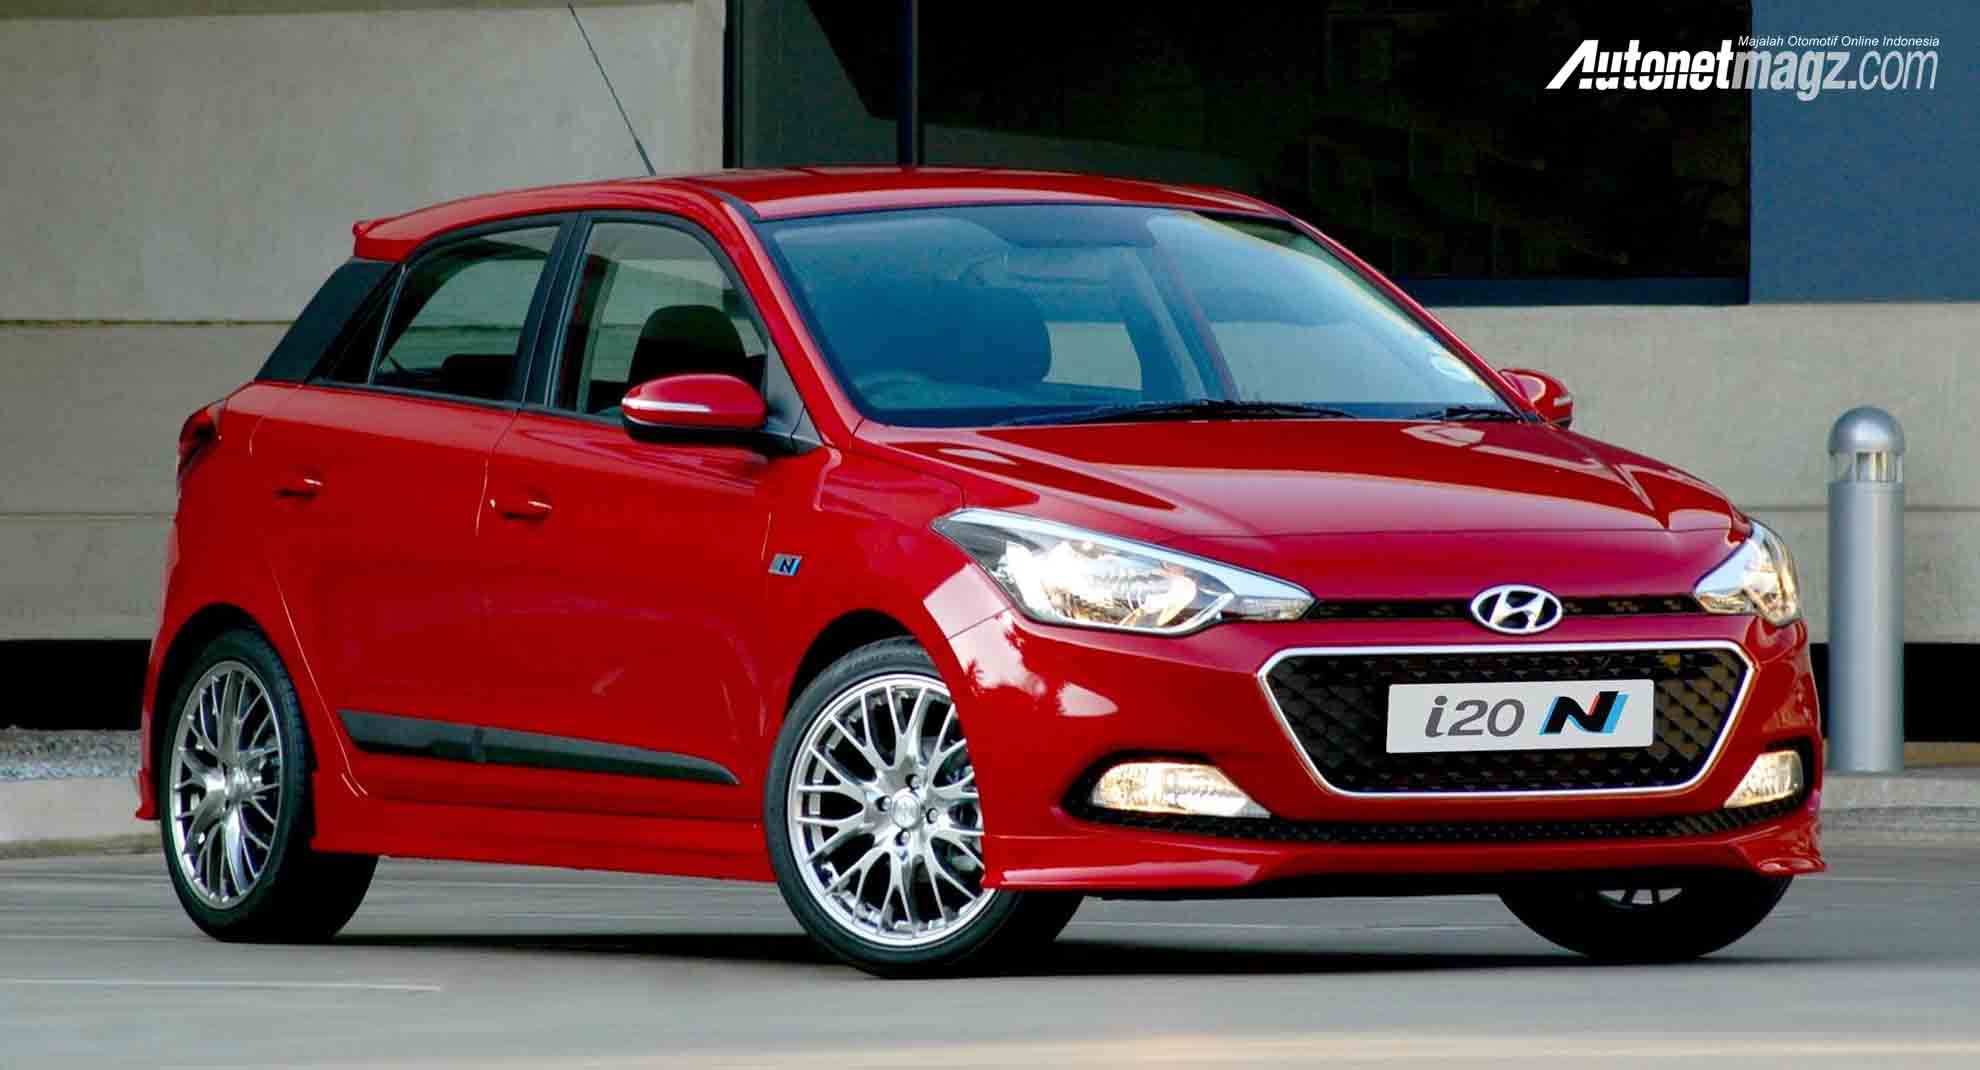 Berita, Hyundai i20 N depan: Hyundai Sedang Siapkan Versi Kencang dari Hyundai i20